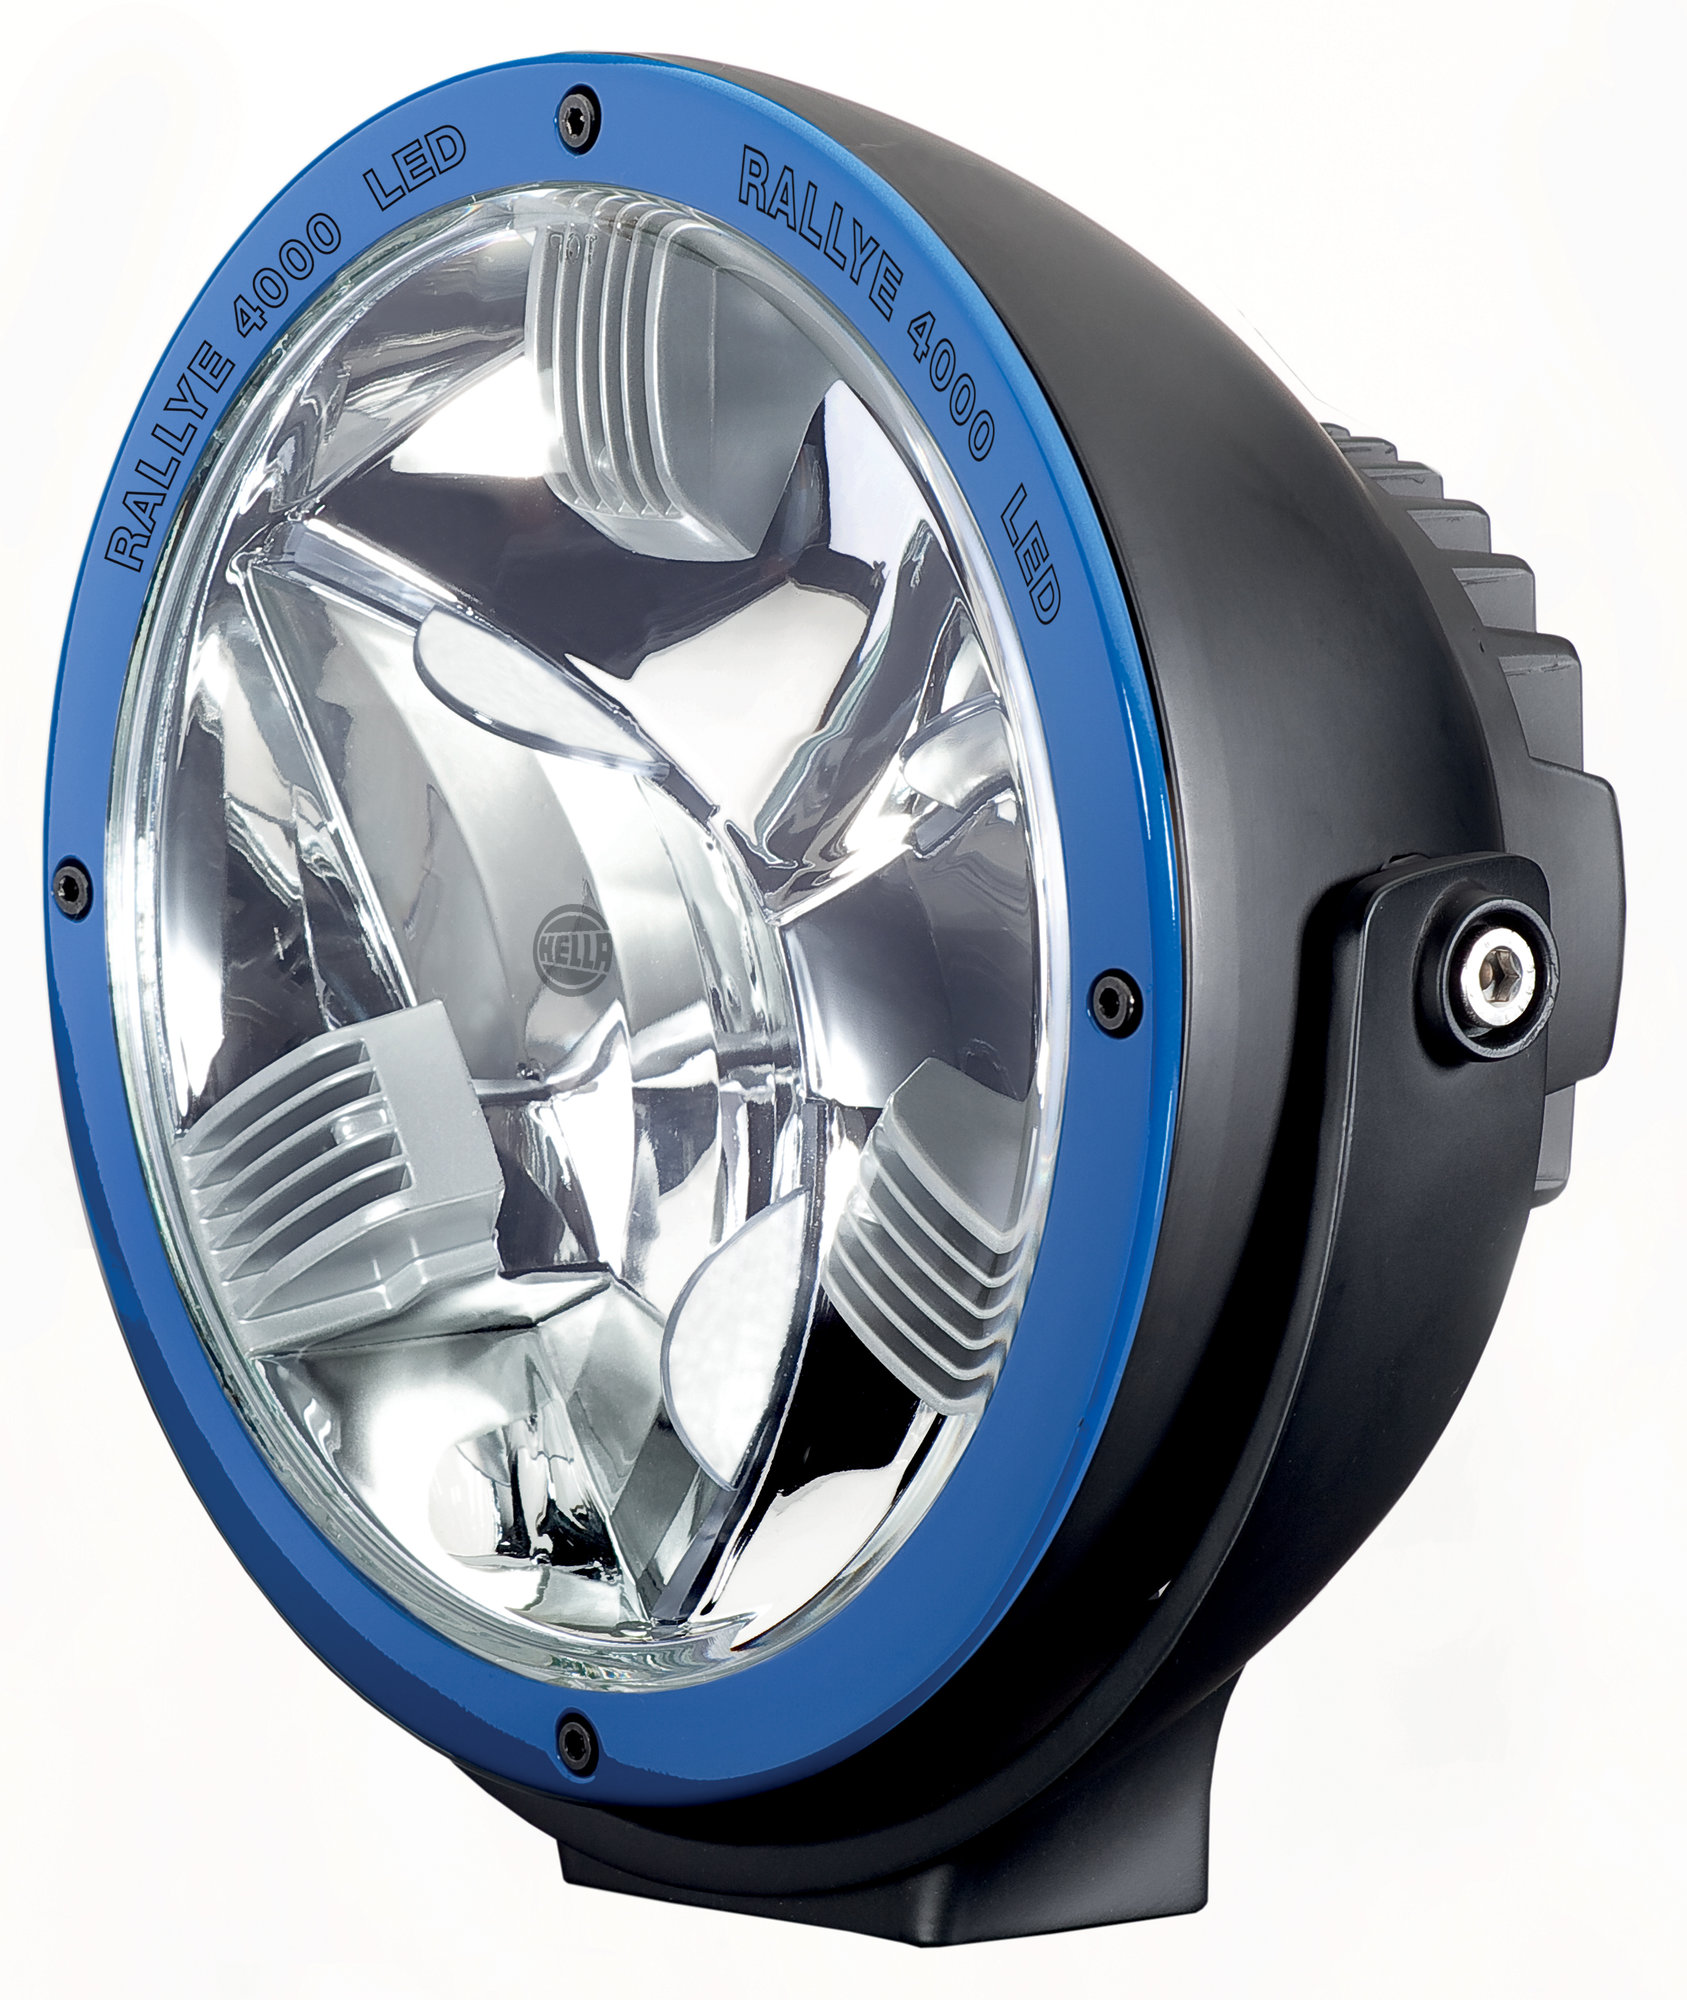 Hella 011002101 Rallye 4000 LED Driving Lamp | Quadratec